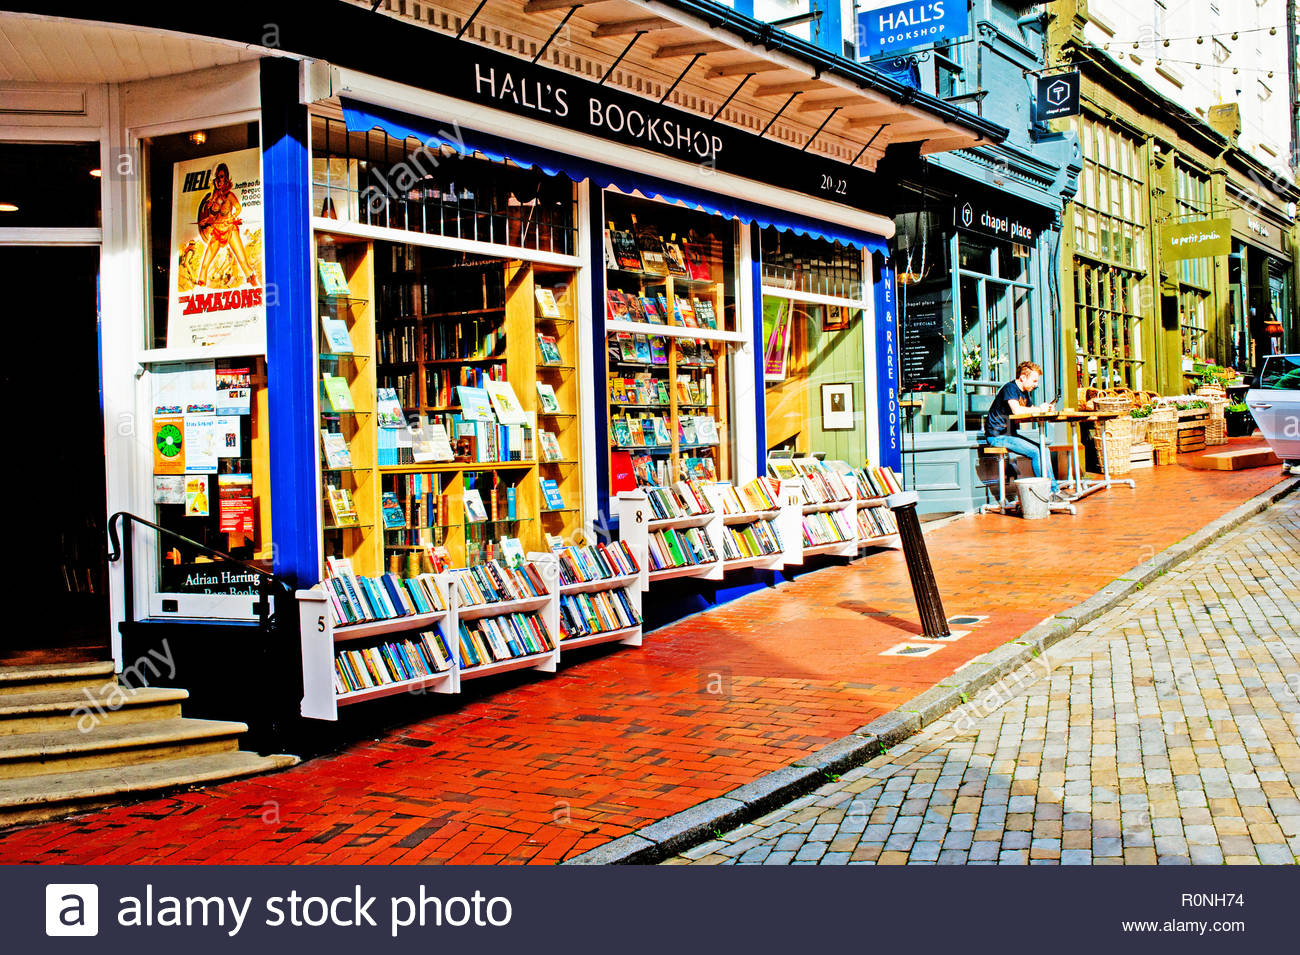 bookshop and cafe chapel place royal tunbridge wells kent england R0NH74